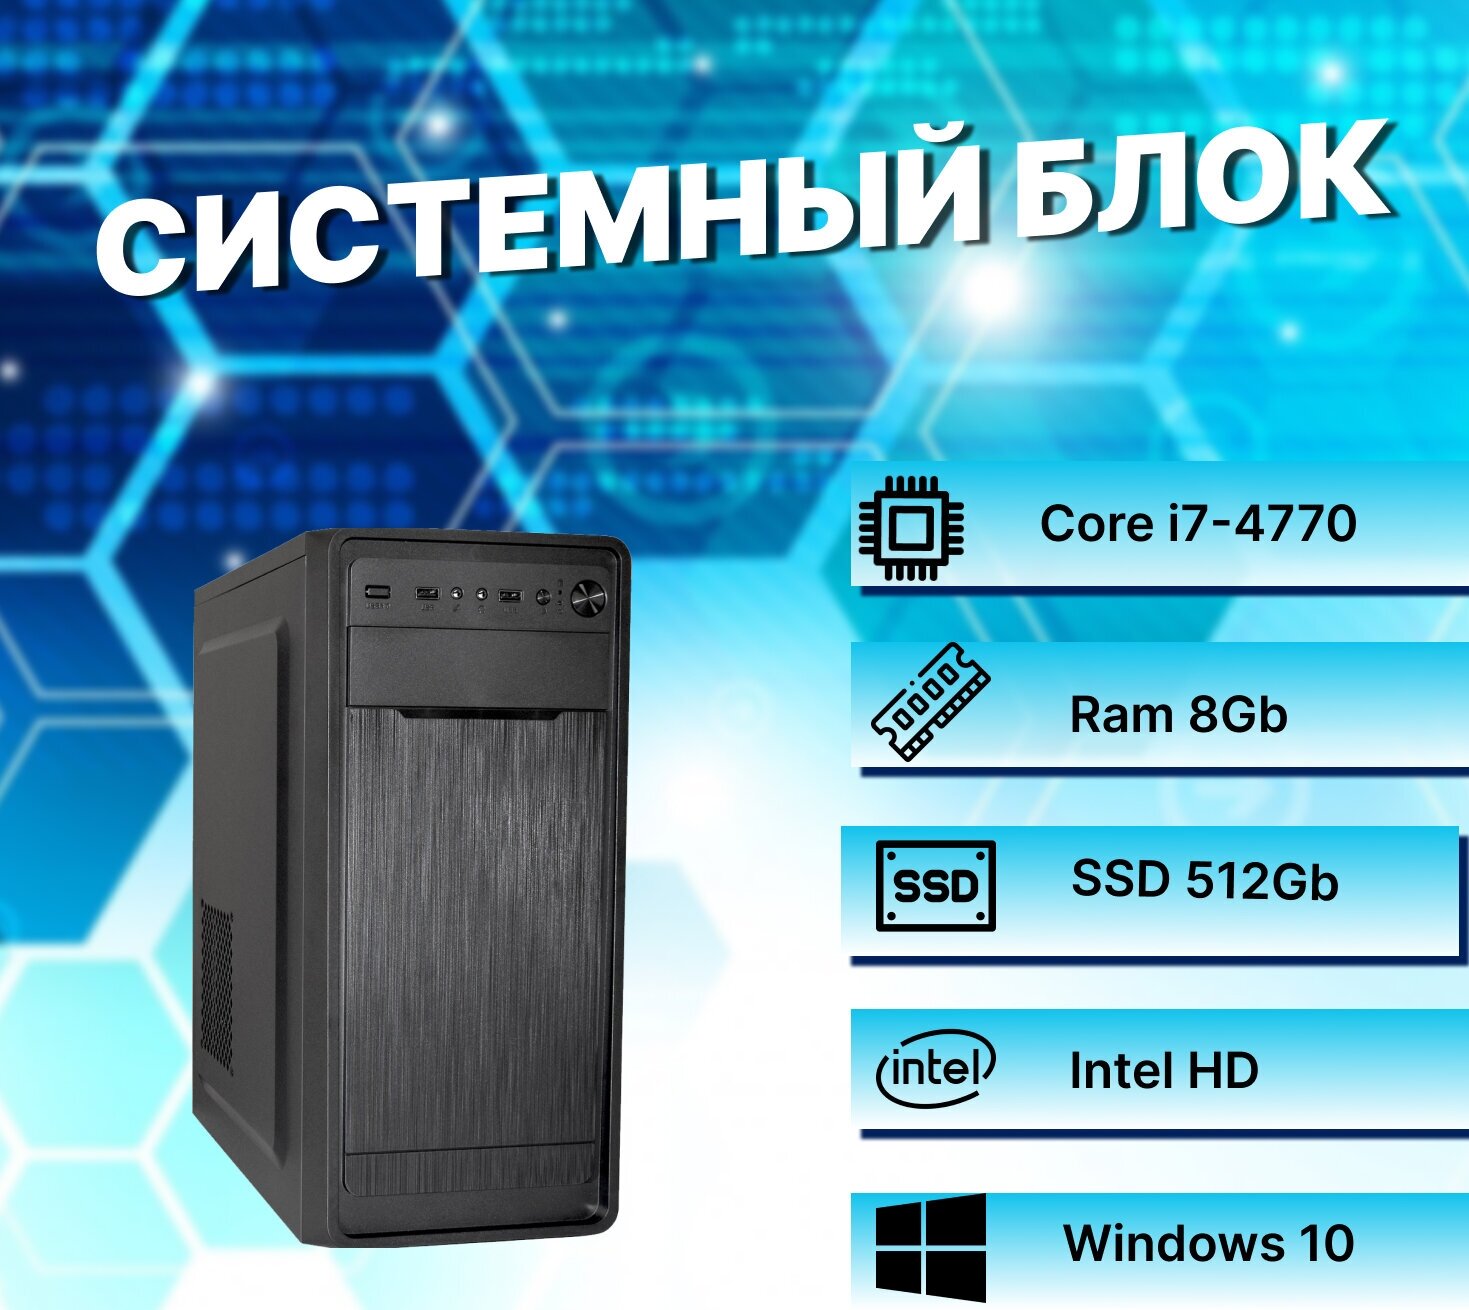 Системный блок Intel Core i7-4770 (3.4ГГц)/ RAM 8Gb/ SSD 512Gb/ Intel HD/ Windows 10 Pro